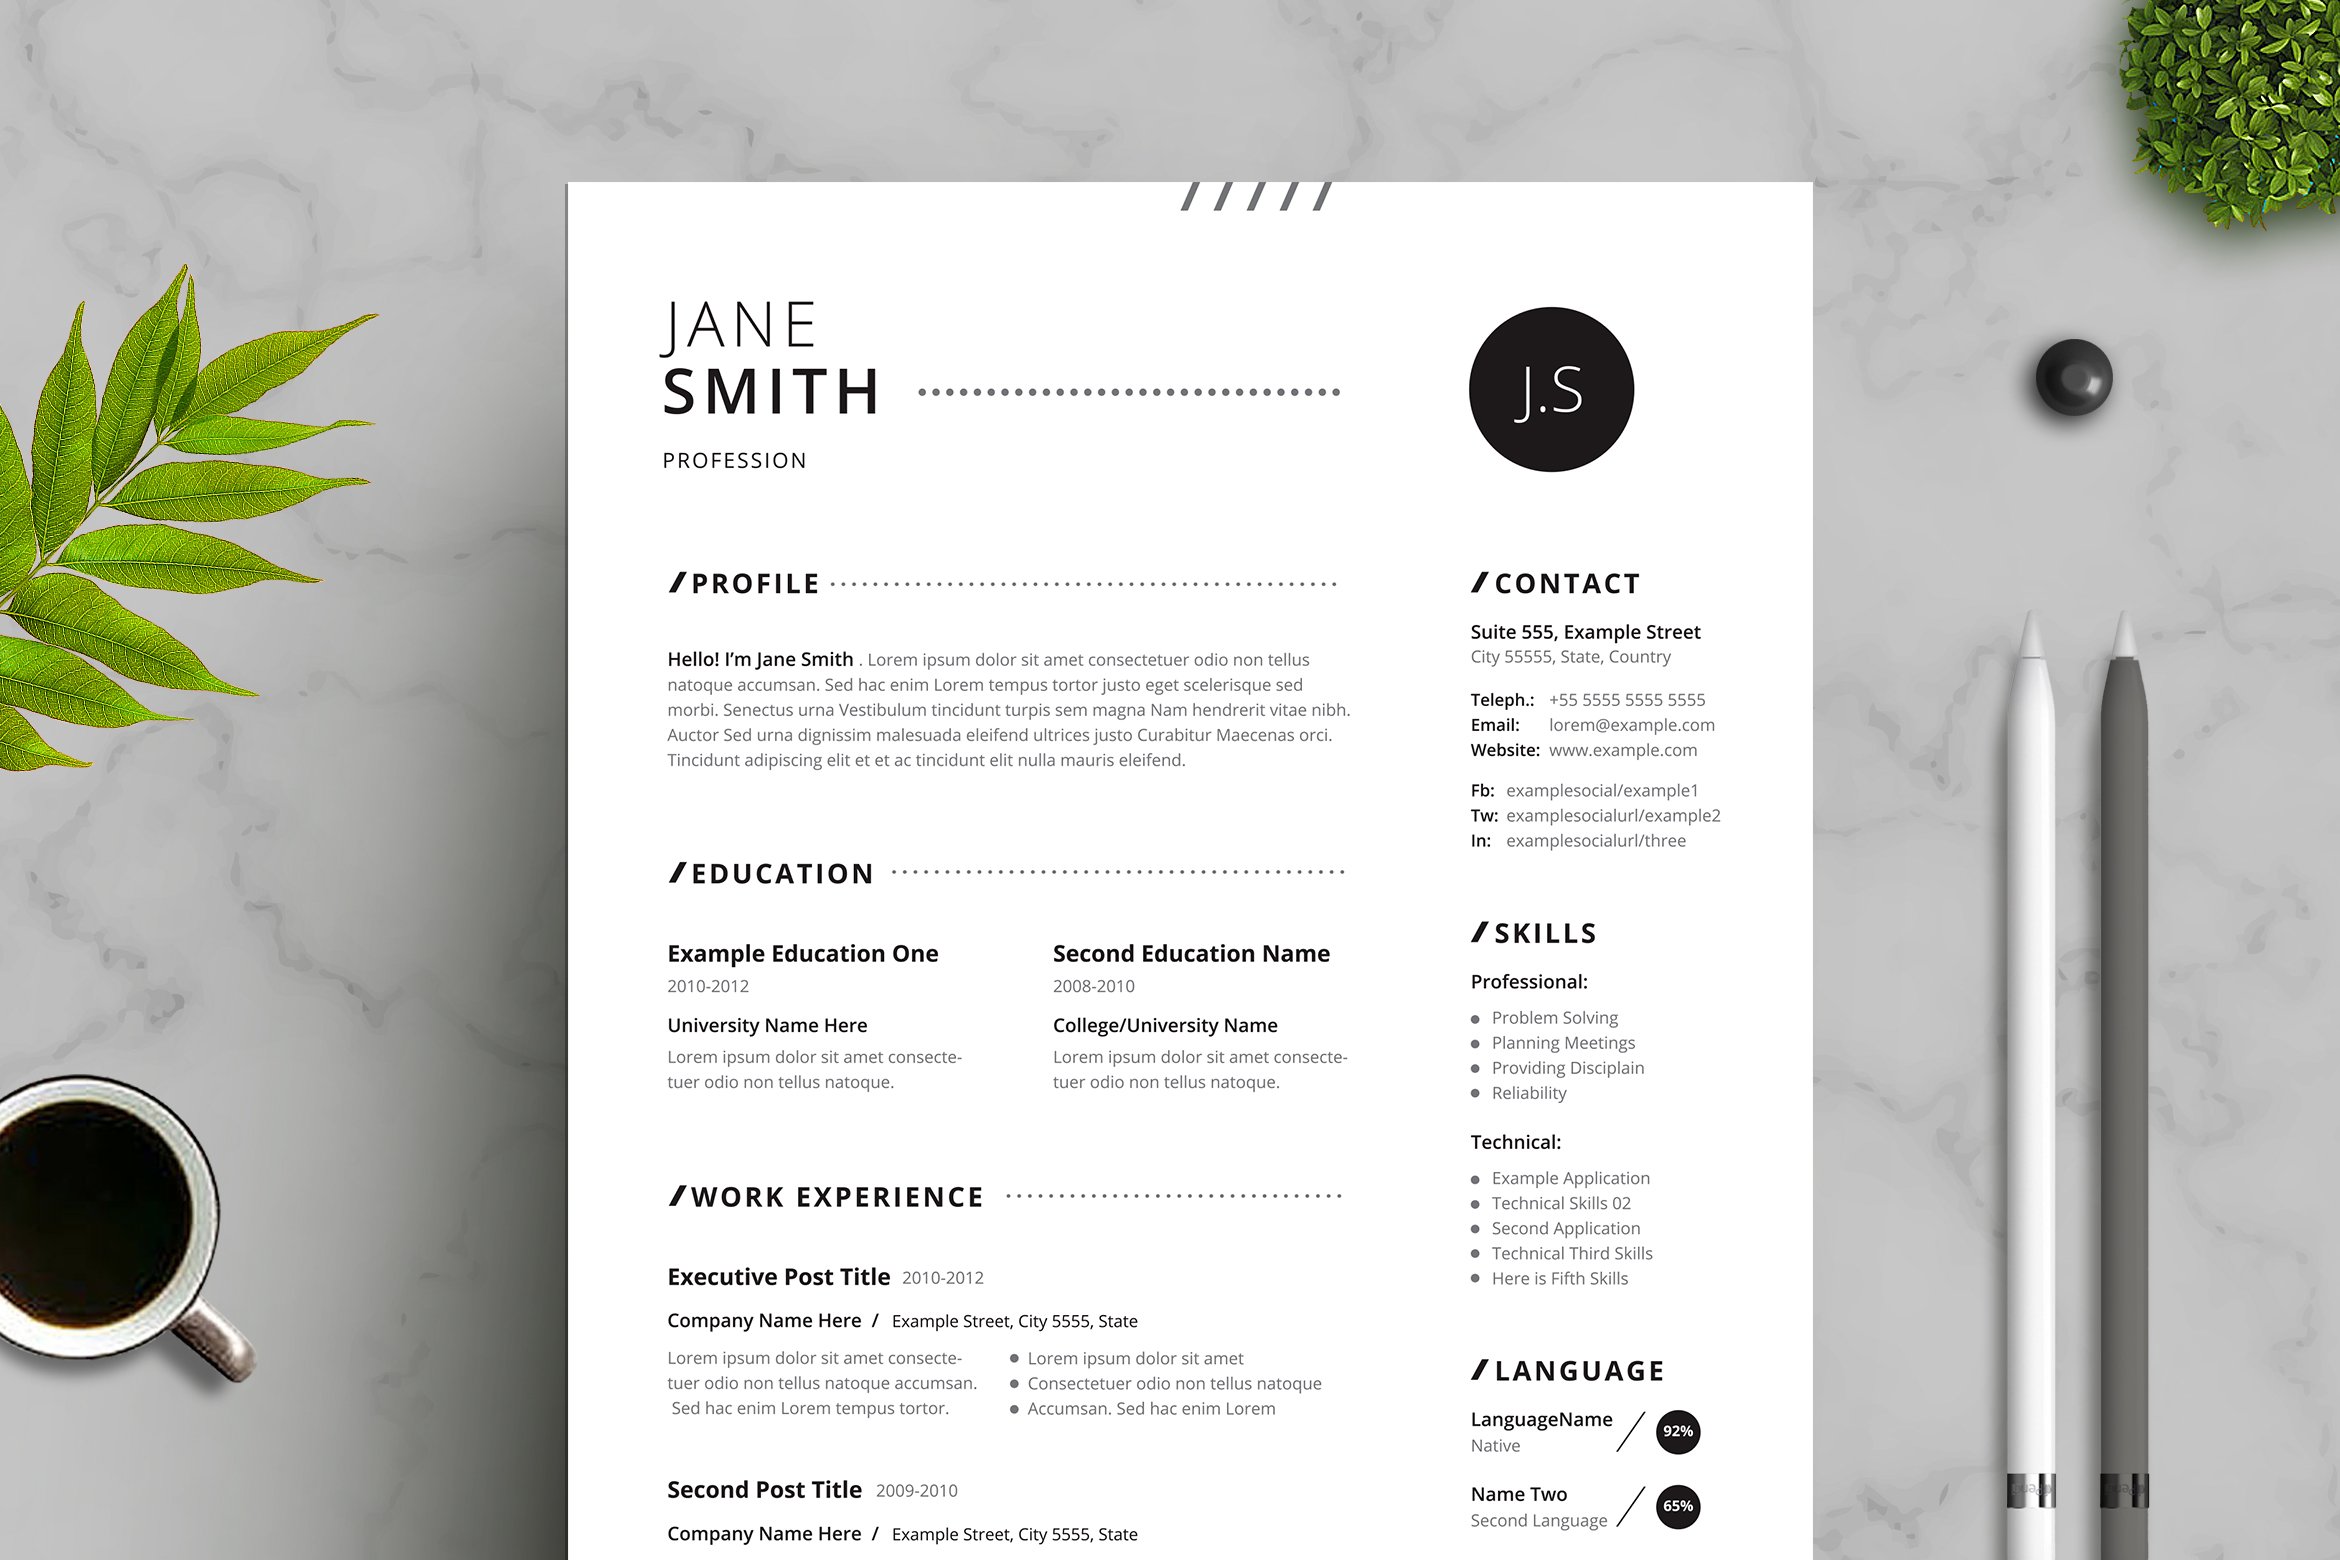 Resume / CV | Minimal Black White cover image.